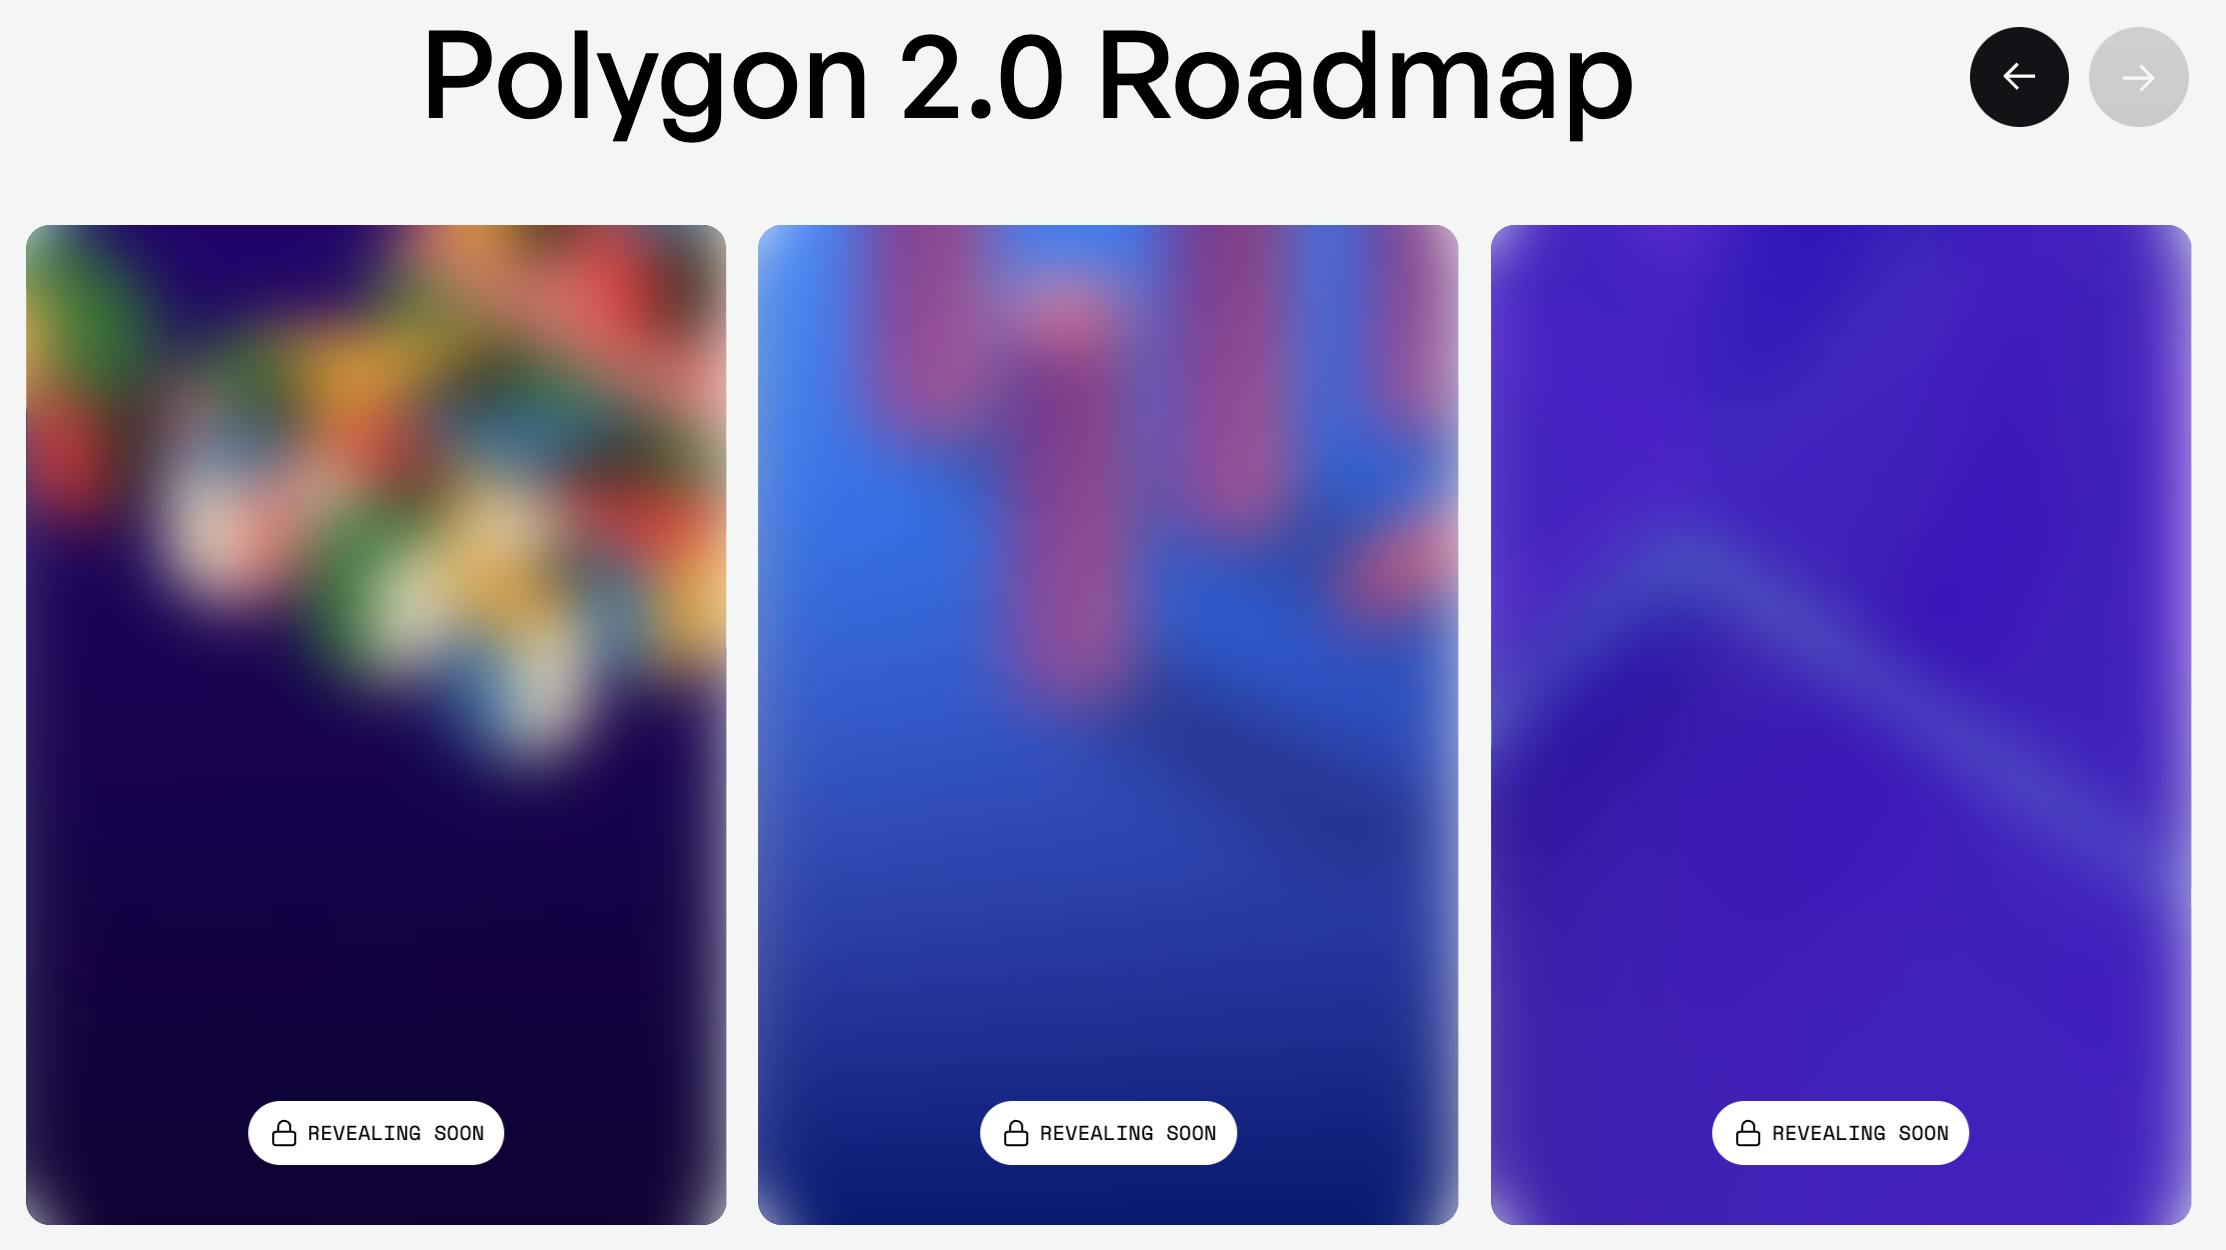 Polygon 2.0 roadmap upcoming things